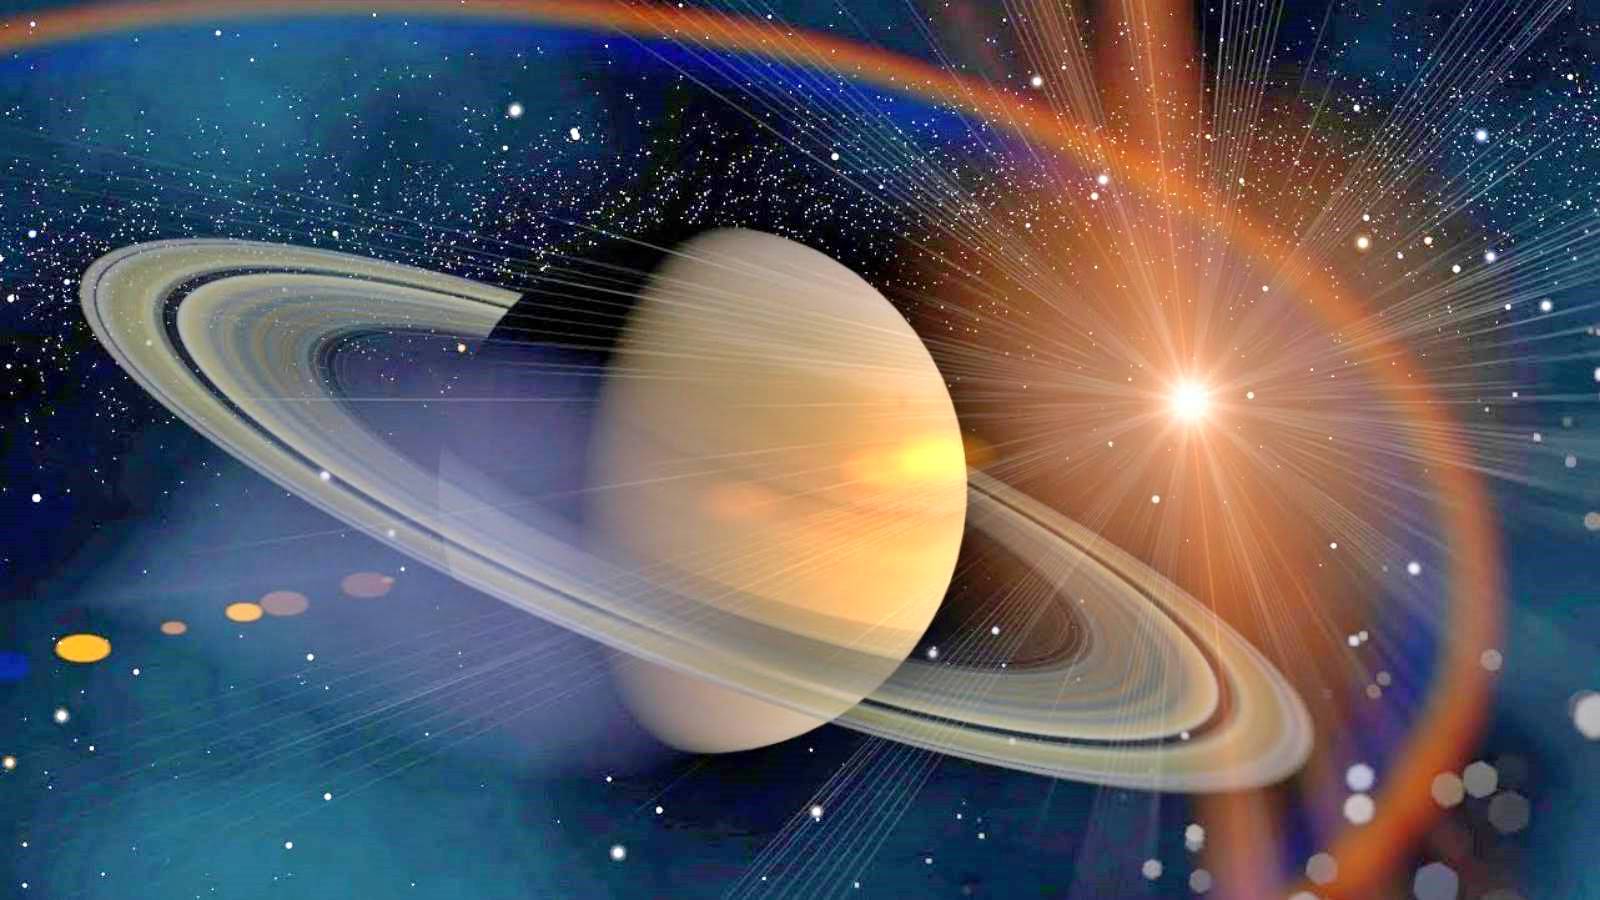 Symmetrie van planeet Saturnus